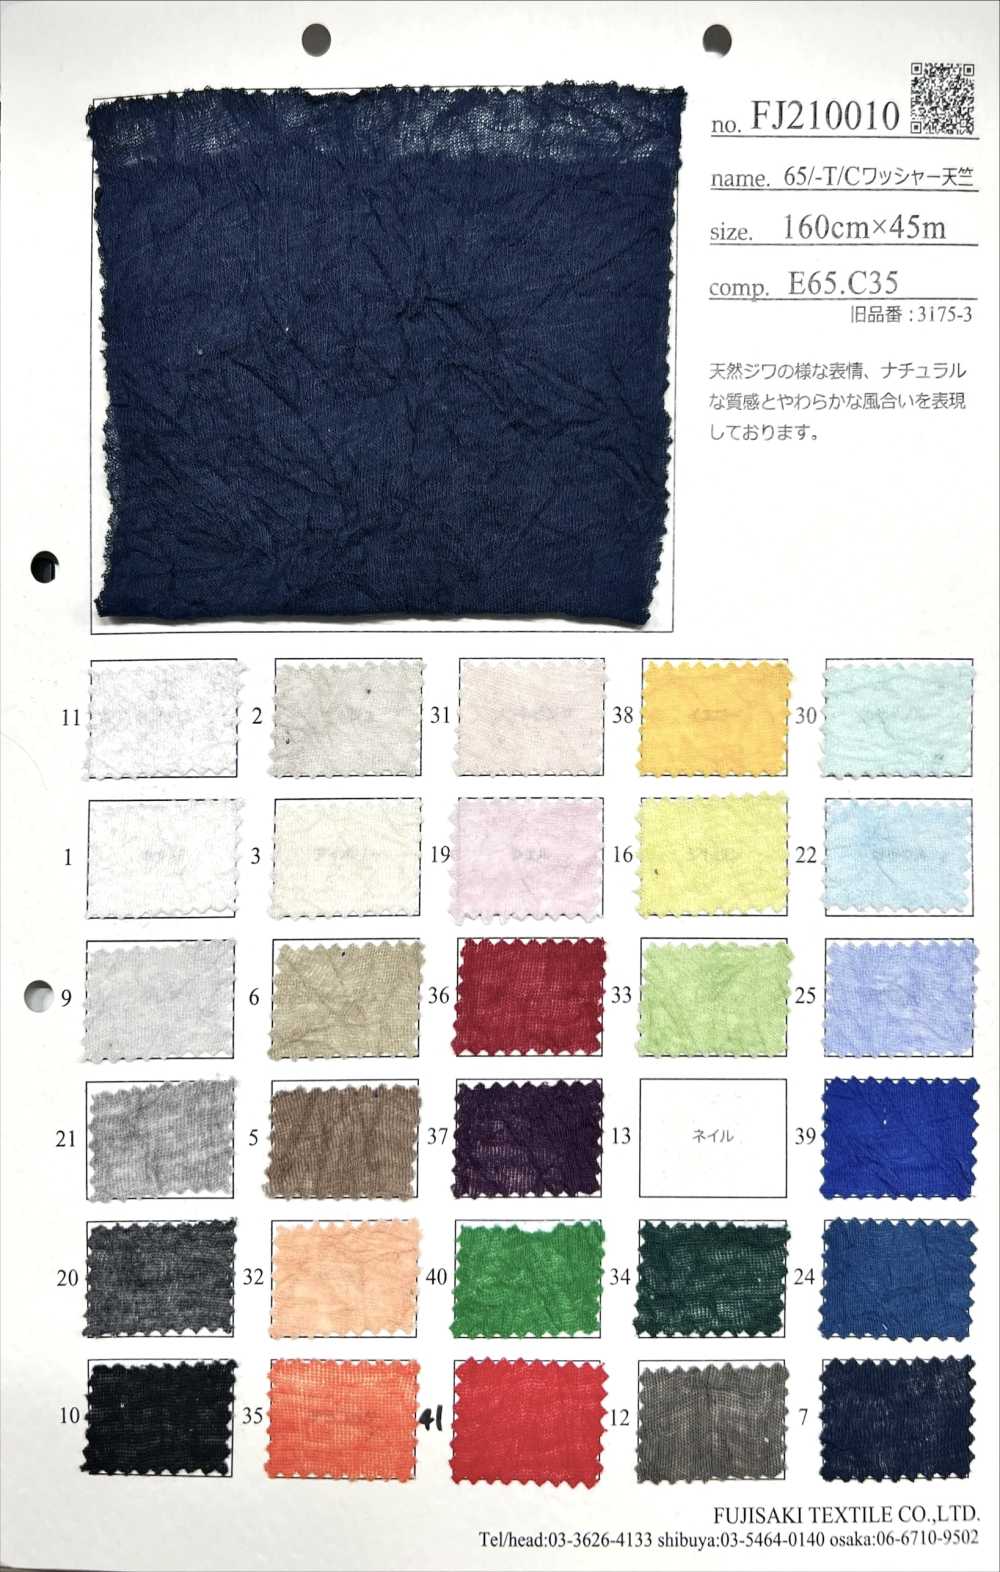 FJ210010 65/-T/C Unterlegscheibe Verarbeitetes Jersey[Textilgewebe] Fujisaki Textile